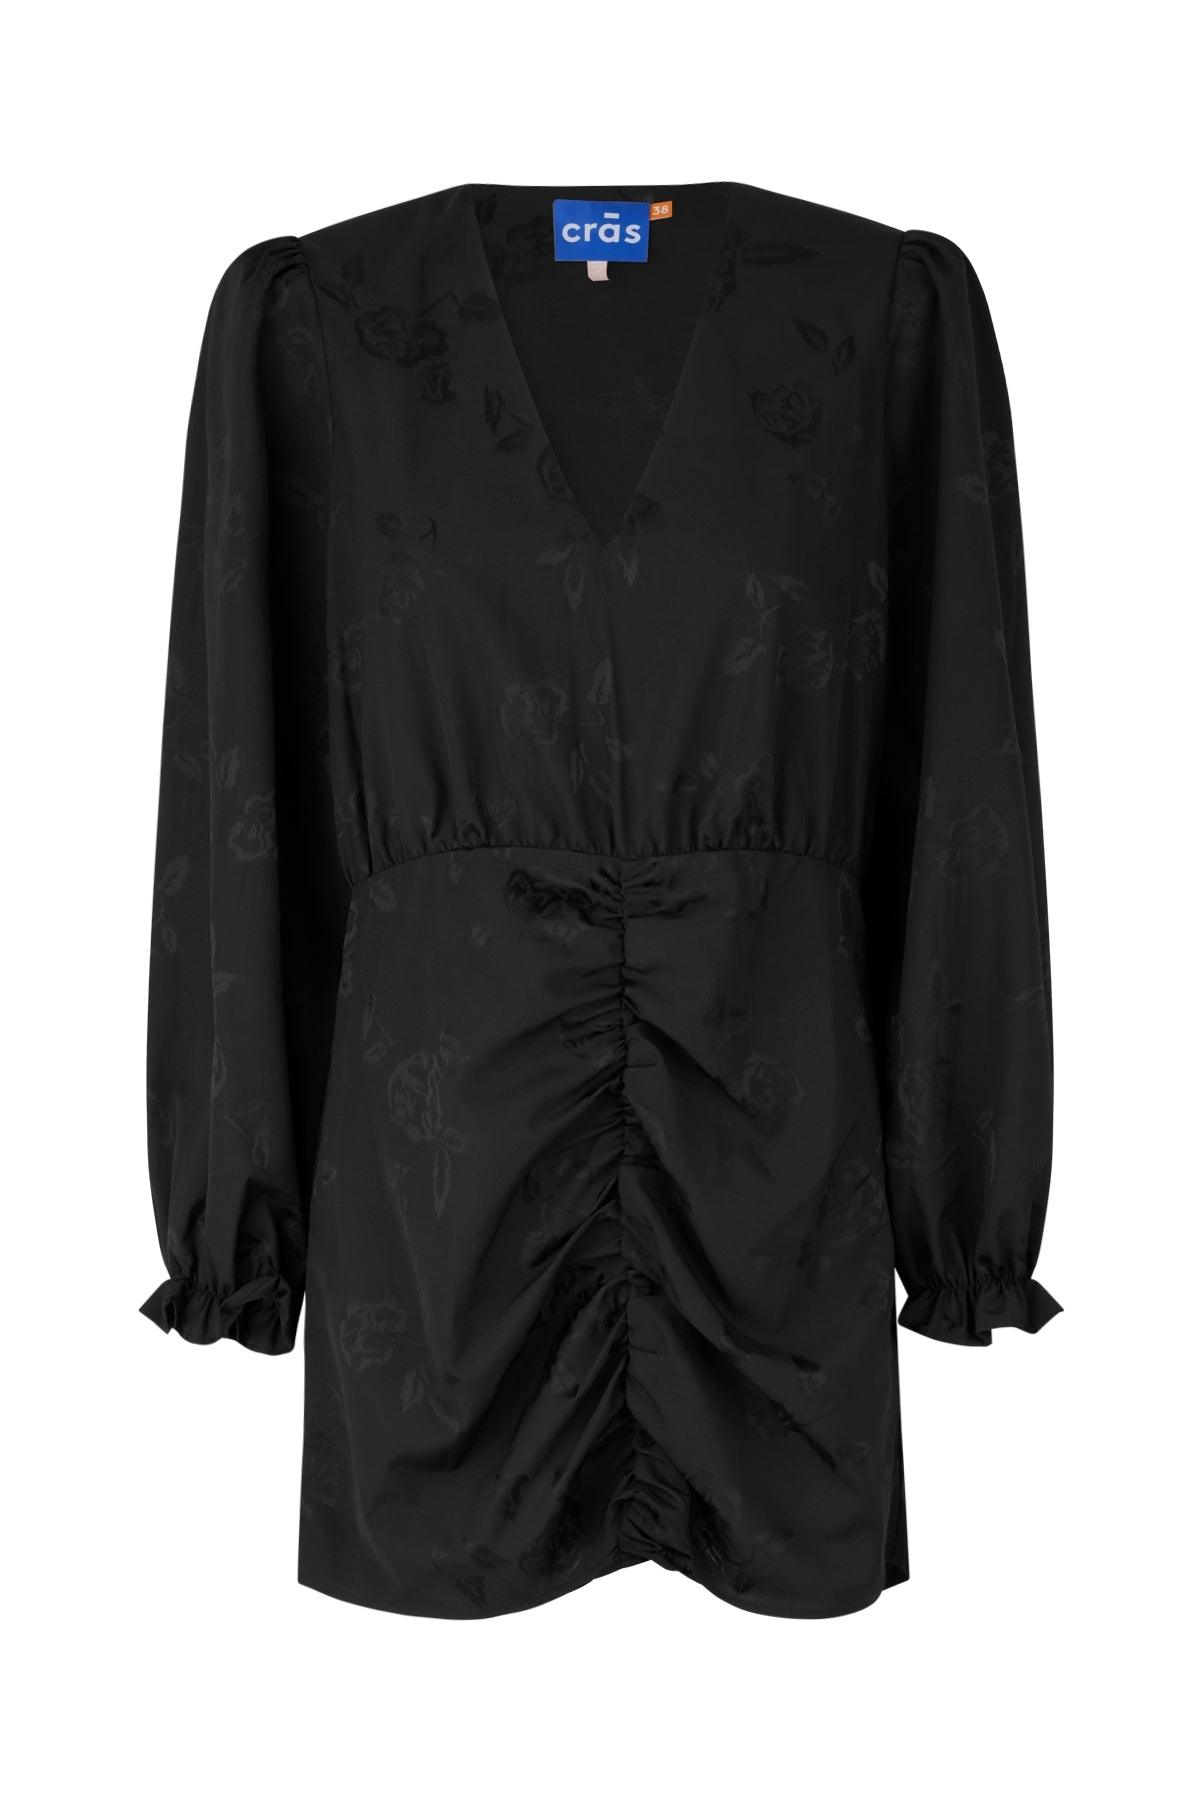 Jada Dress Black - No22 Damplassen